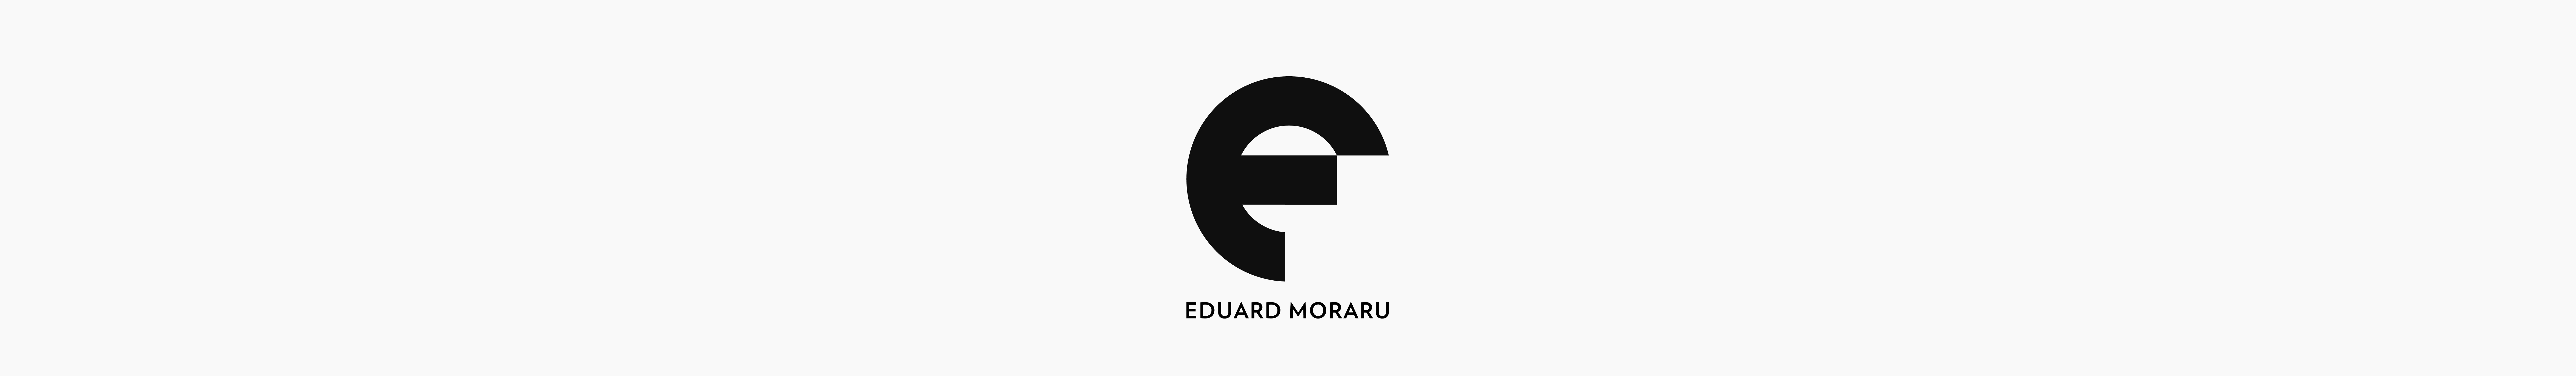 Profielbanner van Eduard Moraru